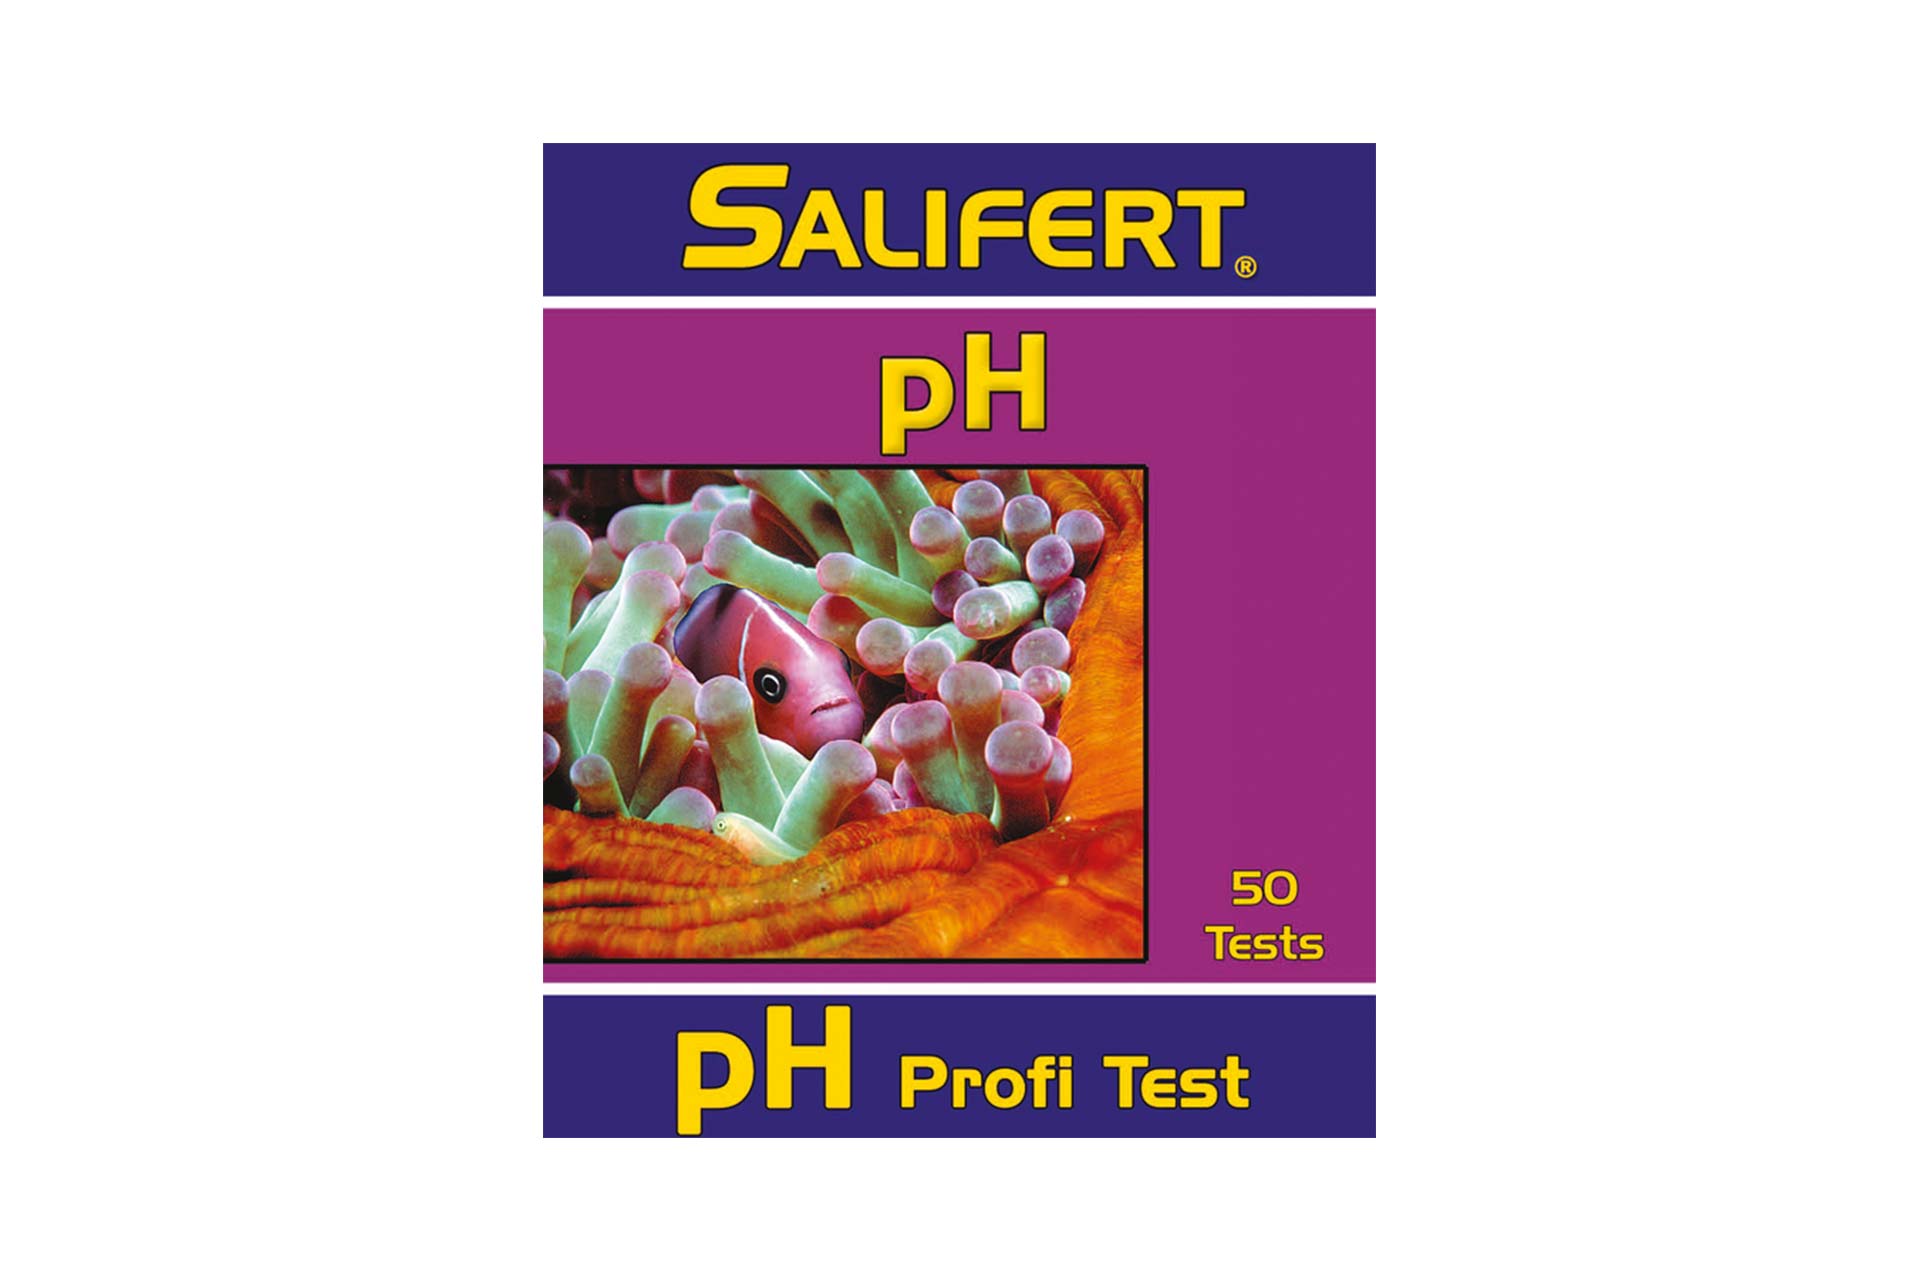 Salfert pH Profi Test for saltwater